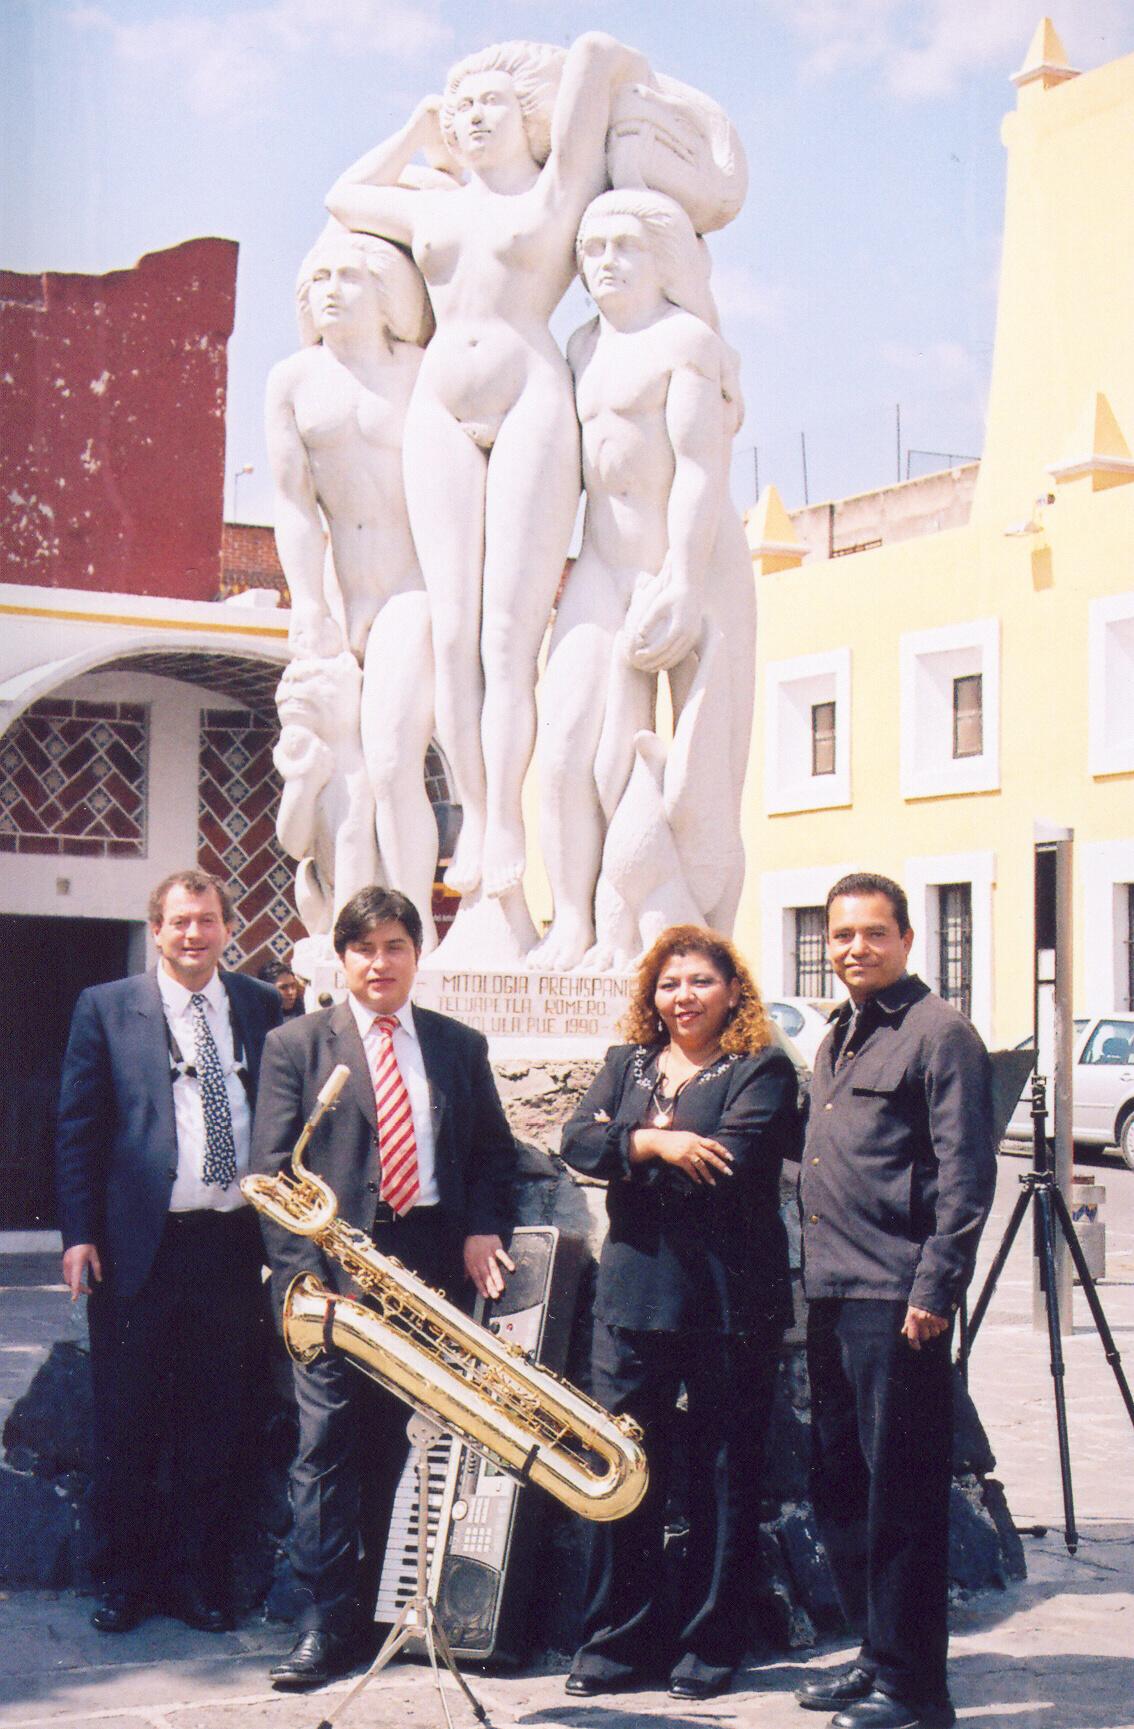 Barrio del Artista Puebla -- 
www.jazz-digestivo.org